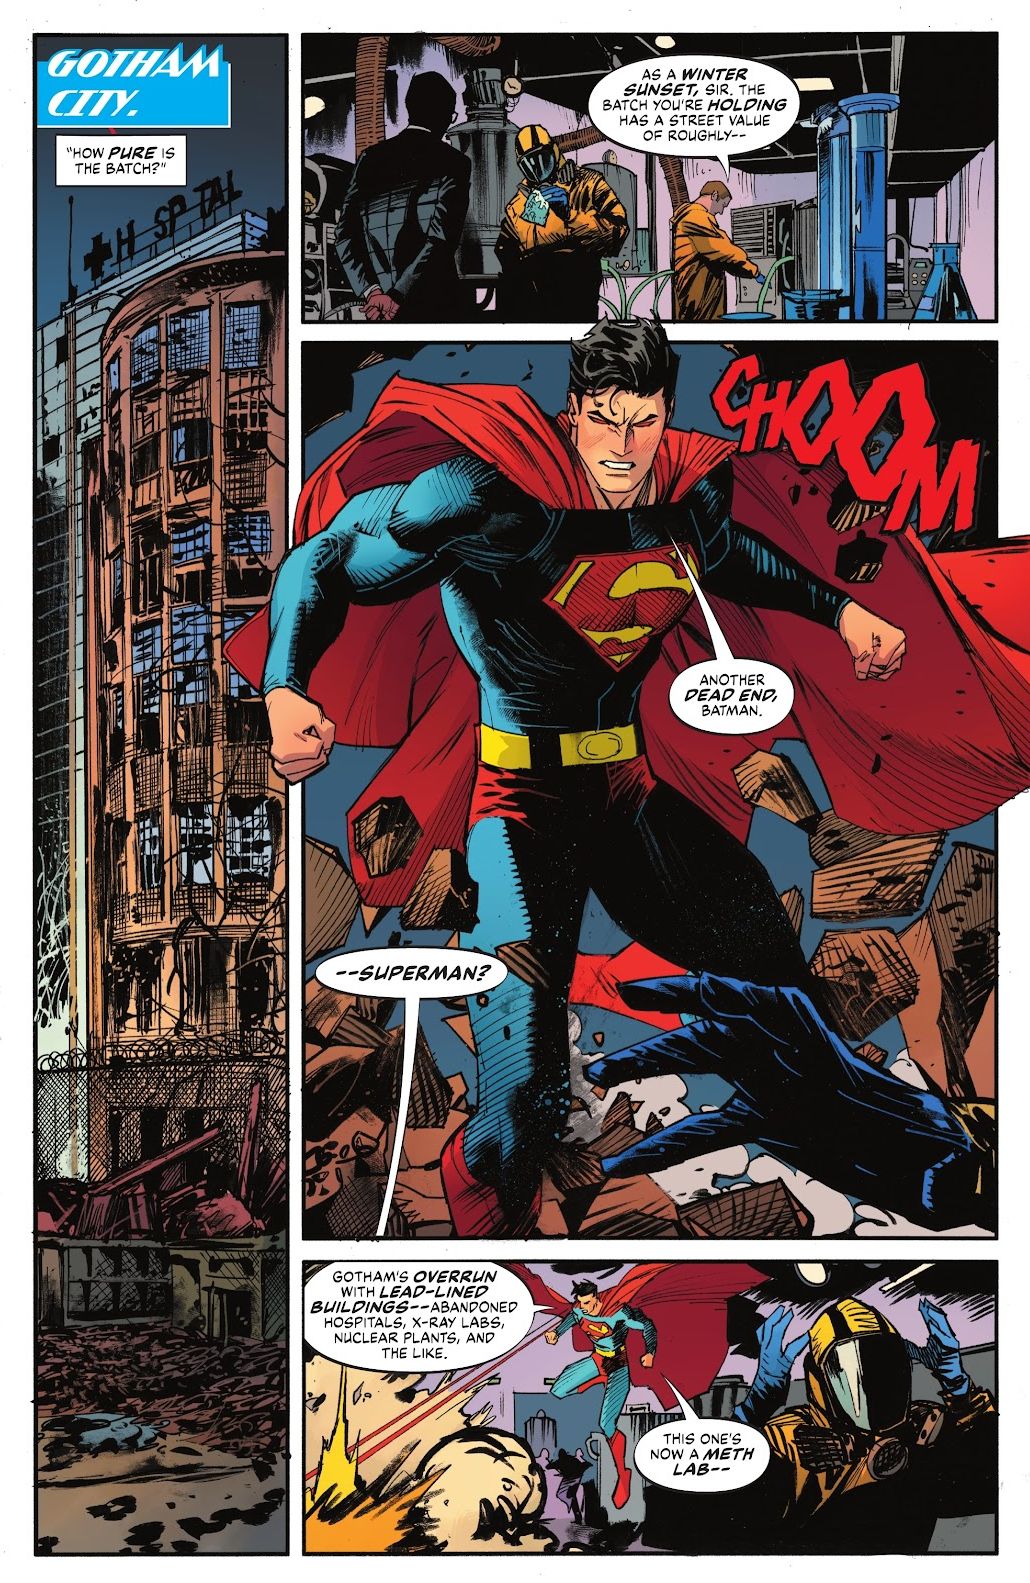 Superman Stymied by Gotham Lead